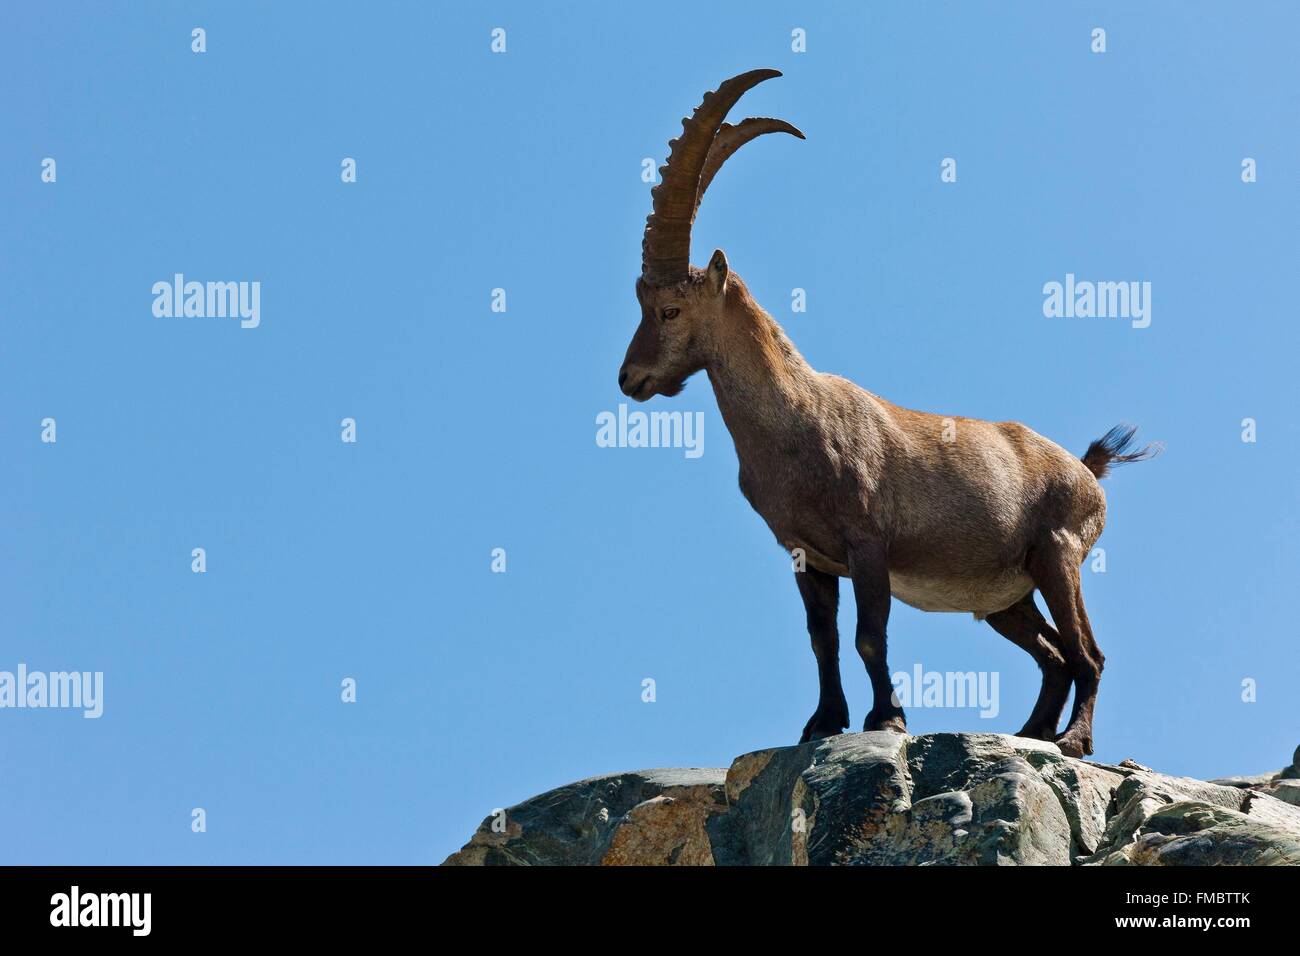 Switzerland, Valais Canton, Ibex (Capra ibex) Stock Photo